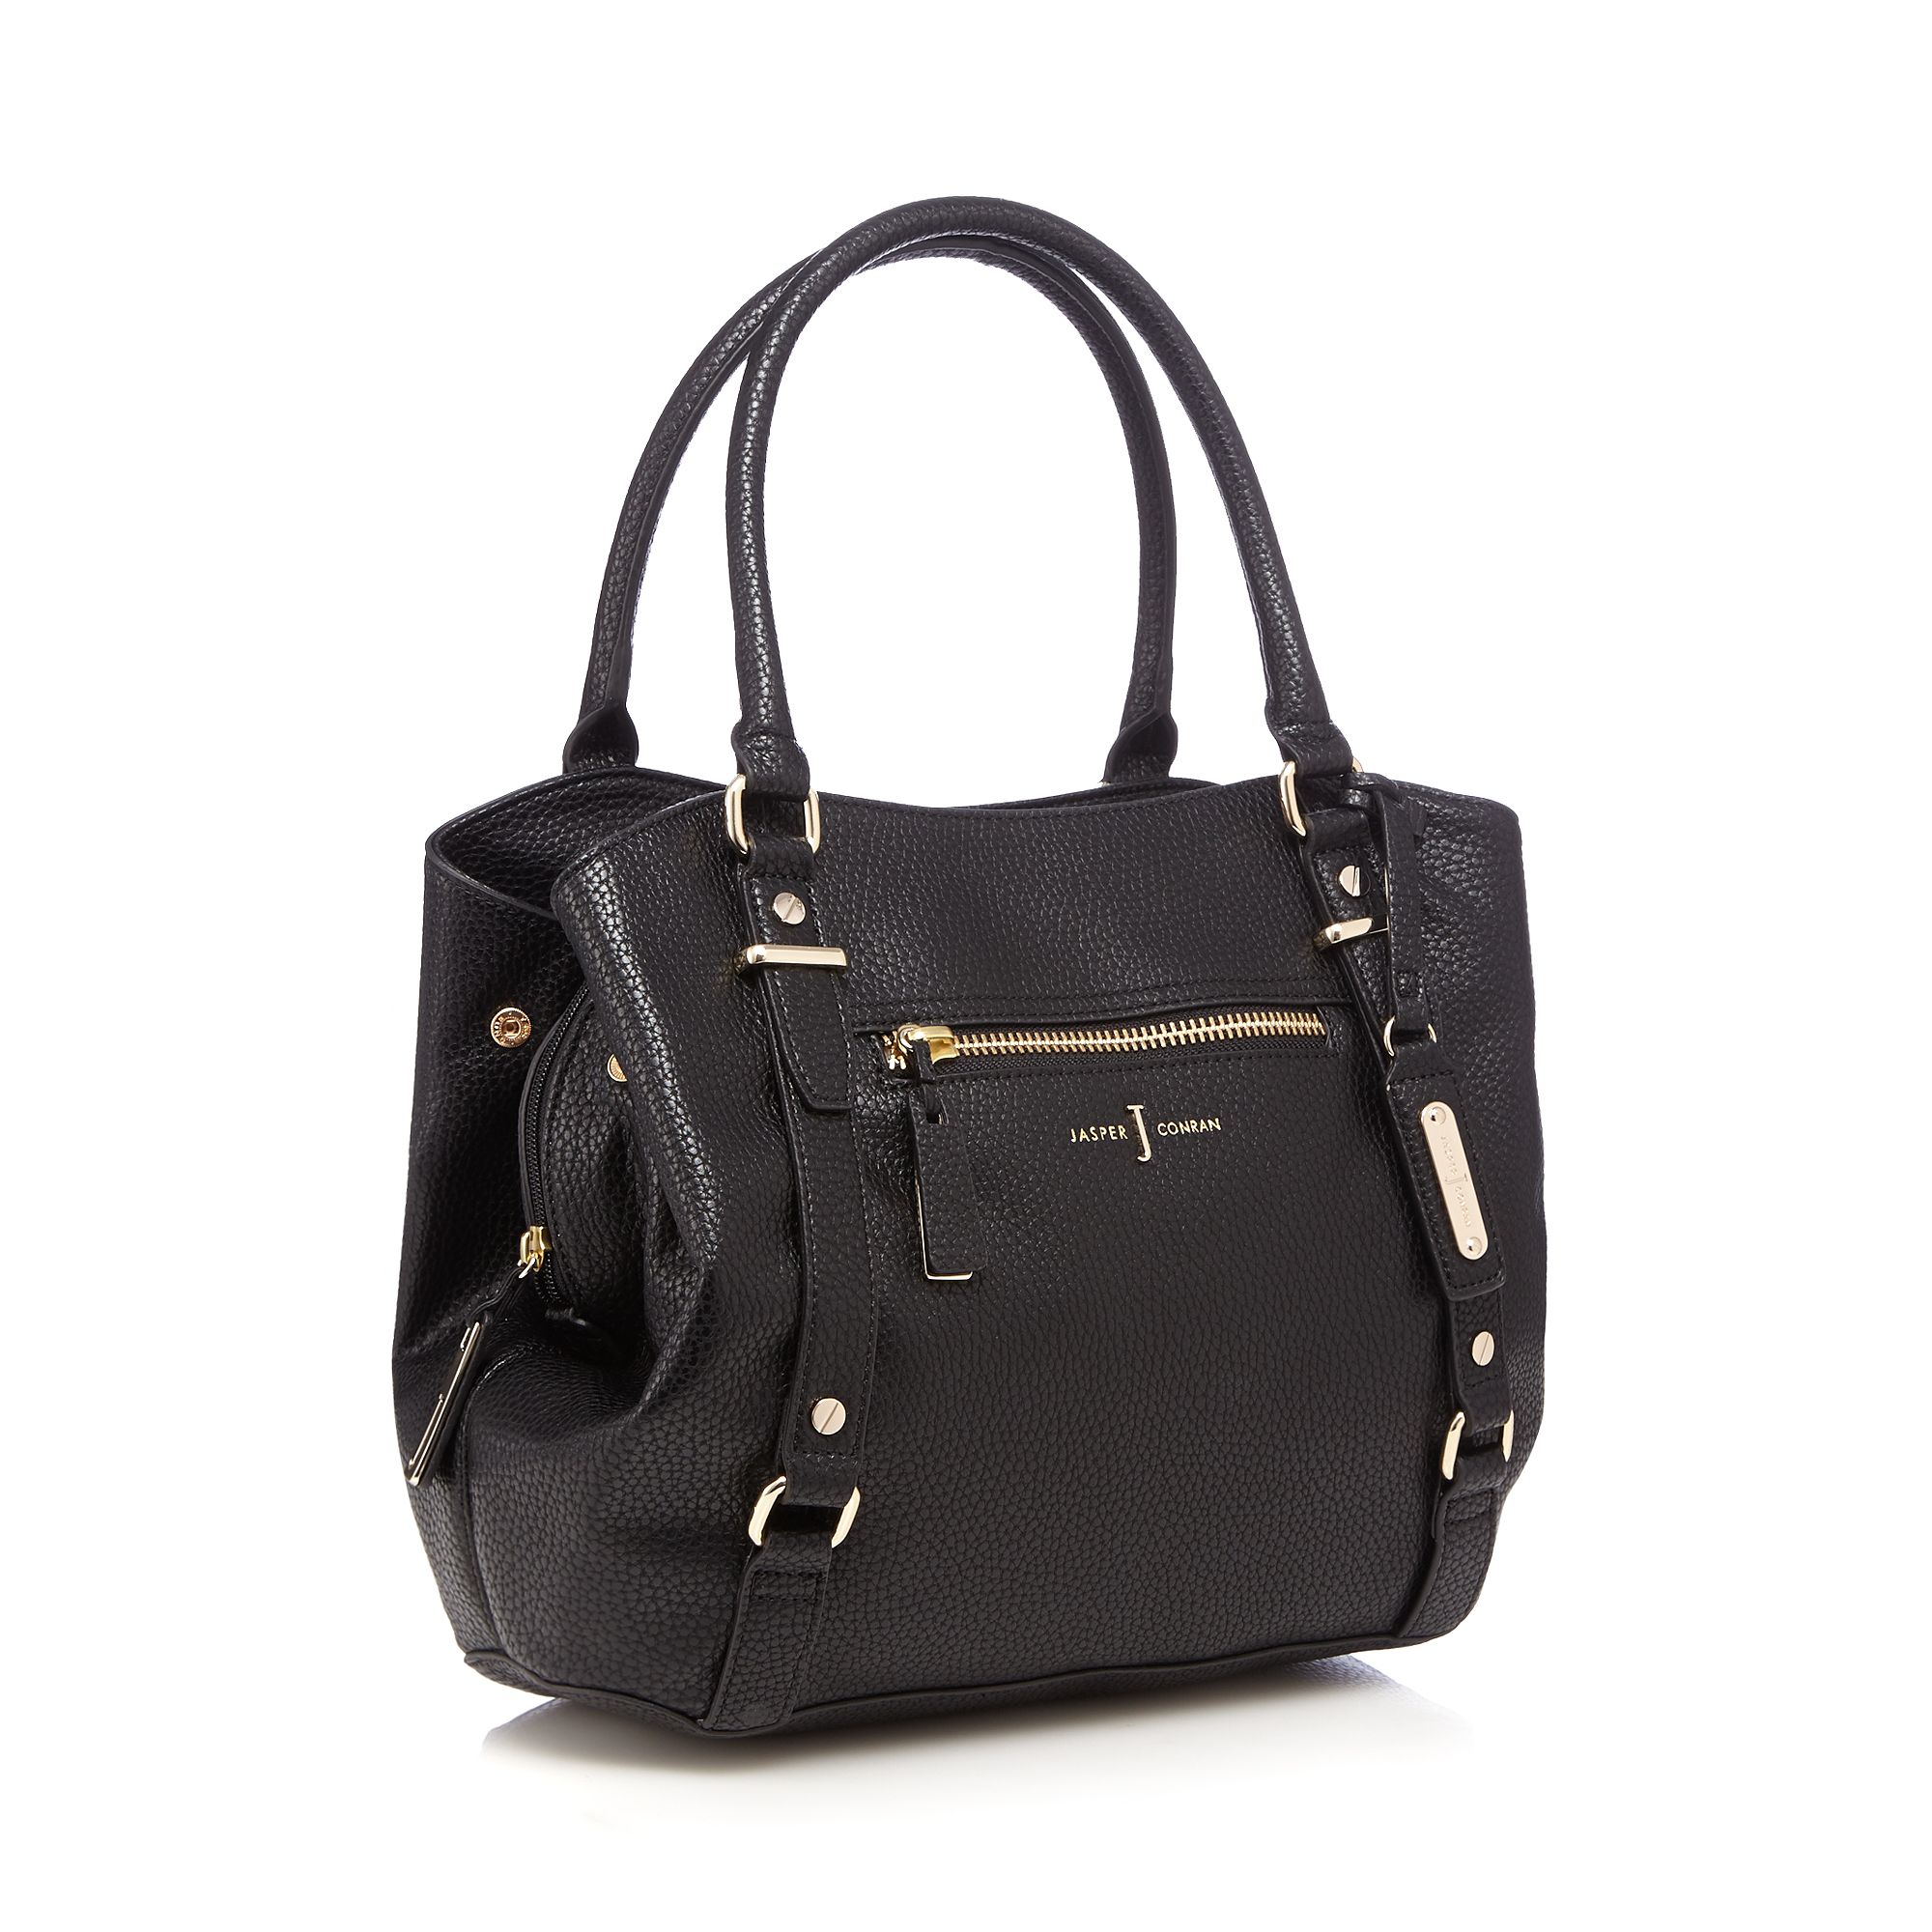 J By Jasper Conran Womens Black Grained Grab Bag From Debenhams | eBay